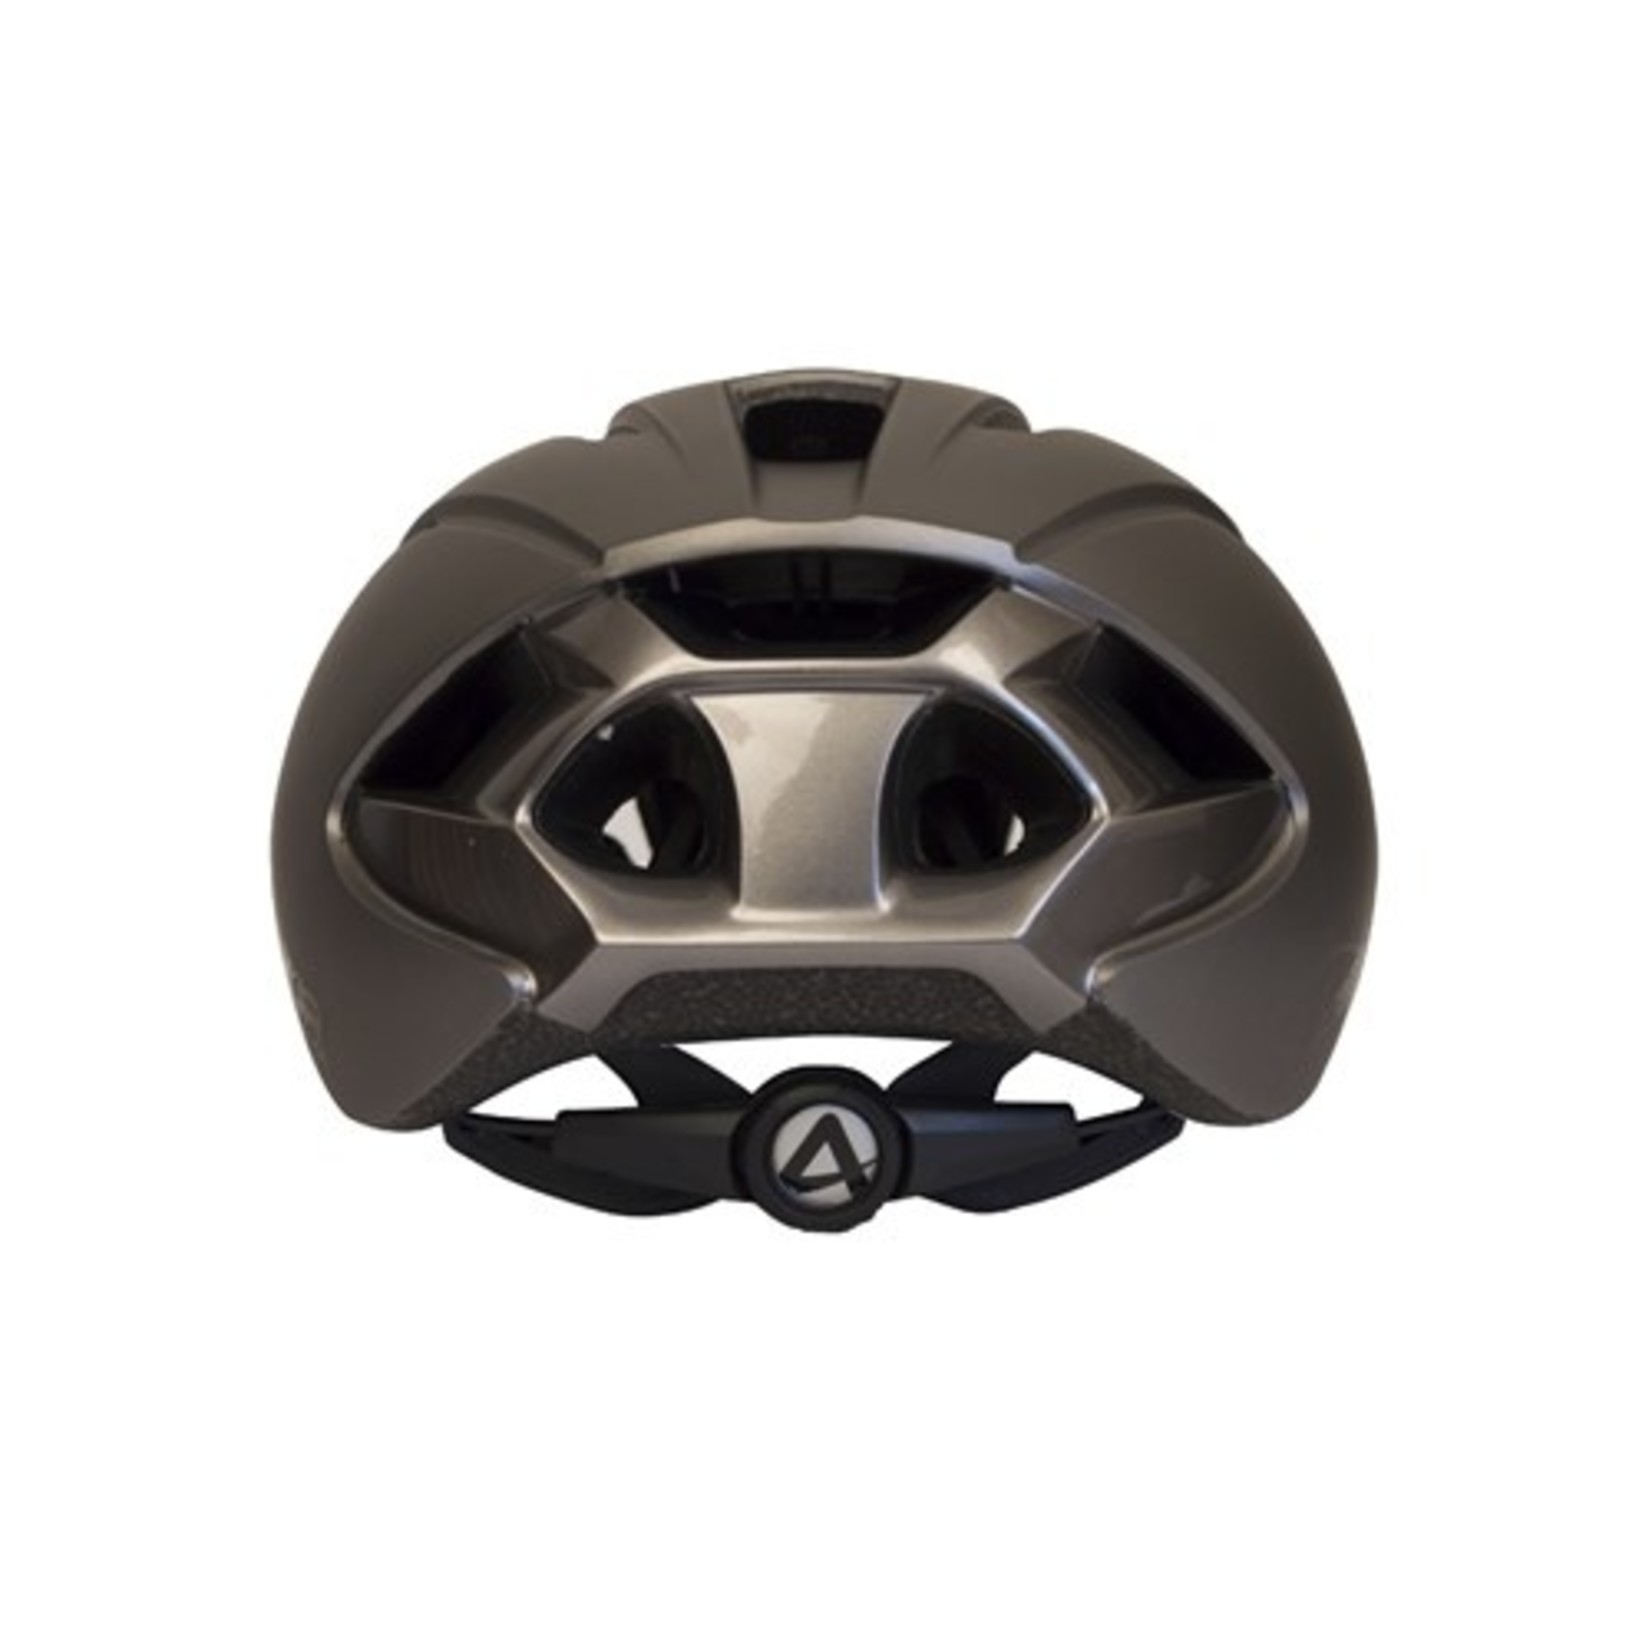 Azur Azur Bike Helmet - RX1 Road - Titanium Lightweight In-Mould Shell